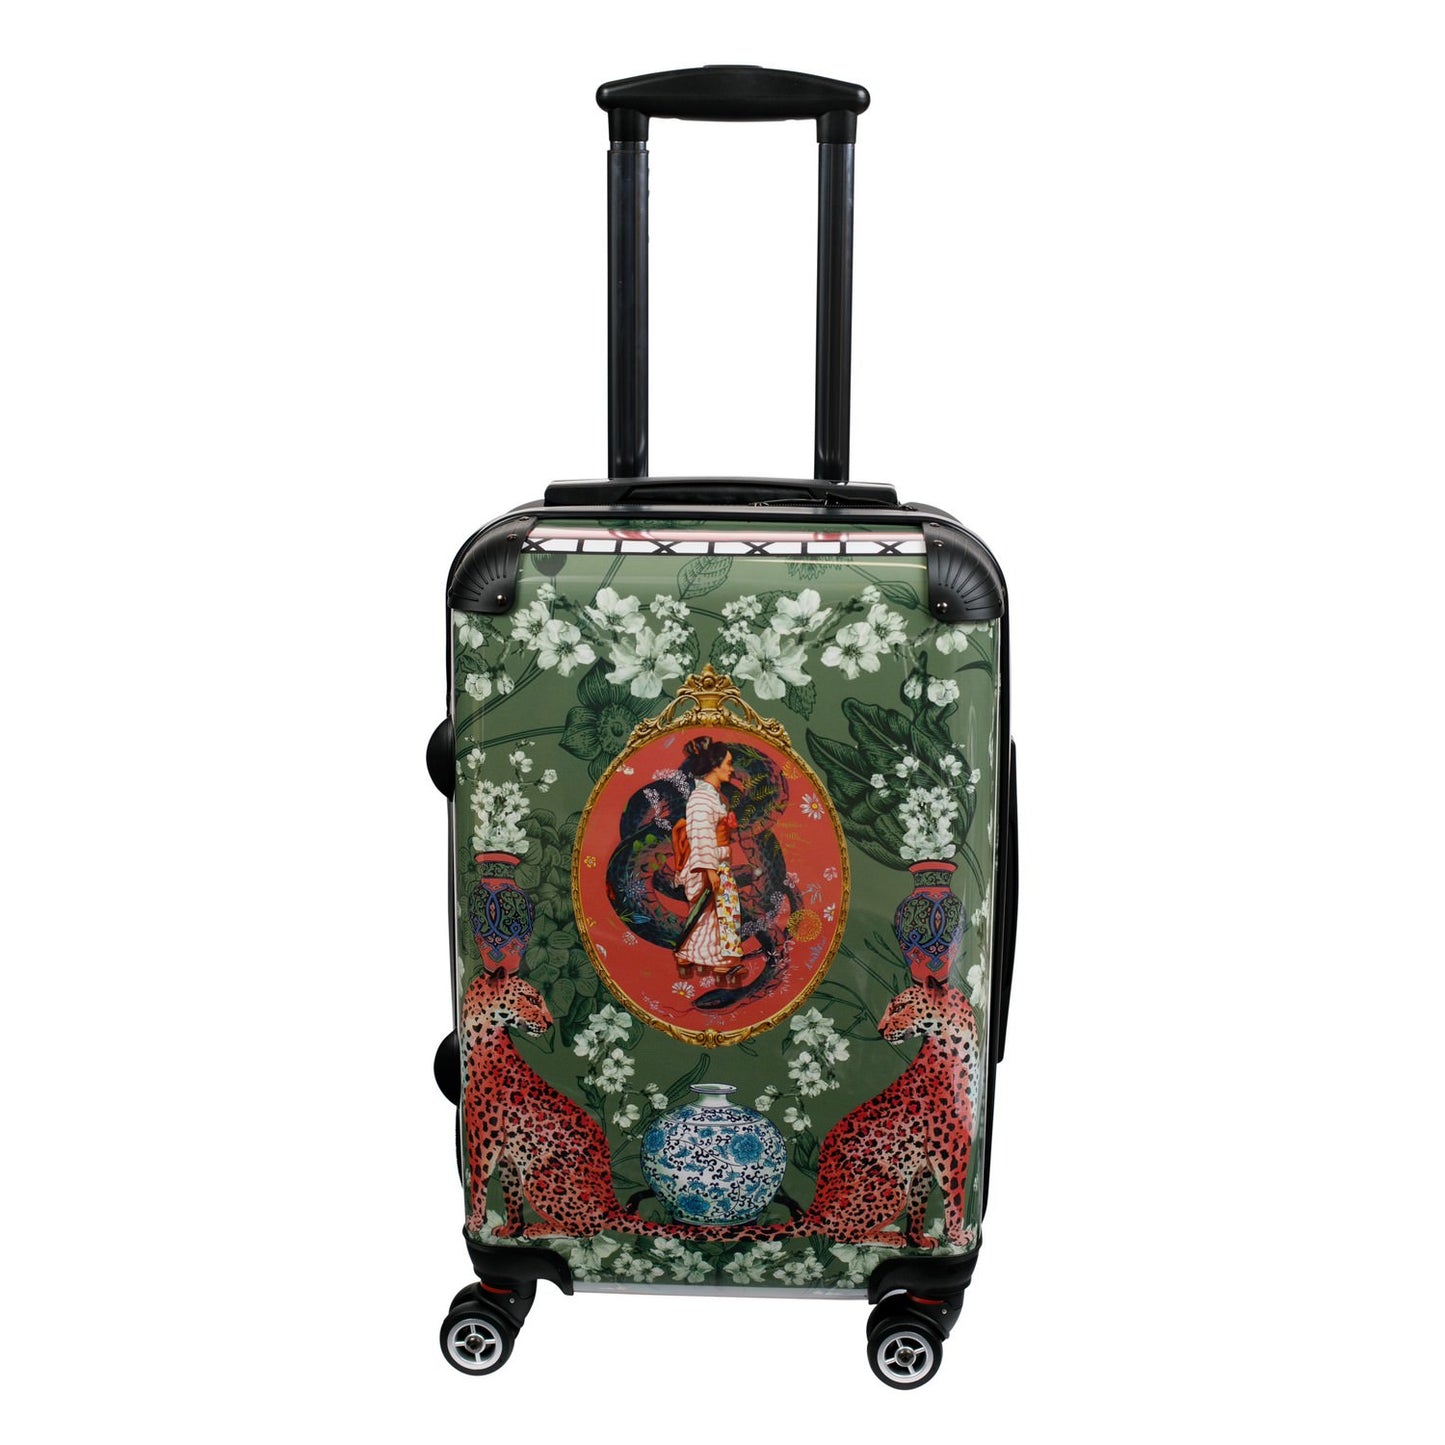 Mishcka Spring Suitcase